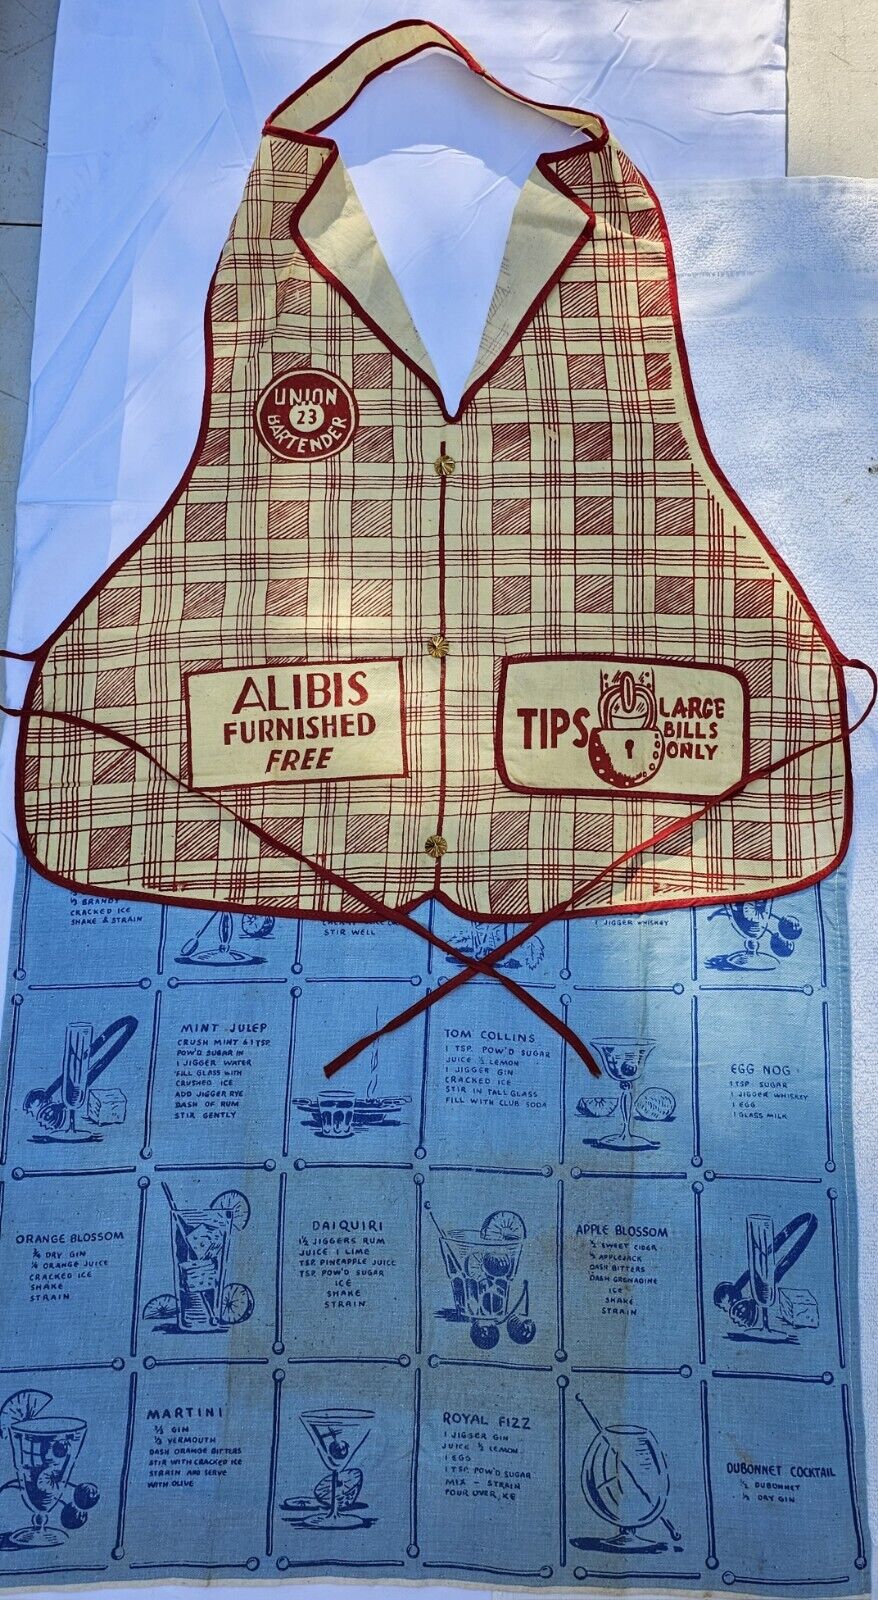 RARE 1950's Authentic Homemaker Apron Union 23 Bartender Free Alibis Tip Pocket